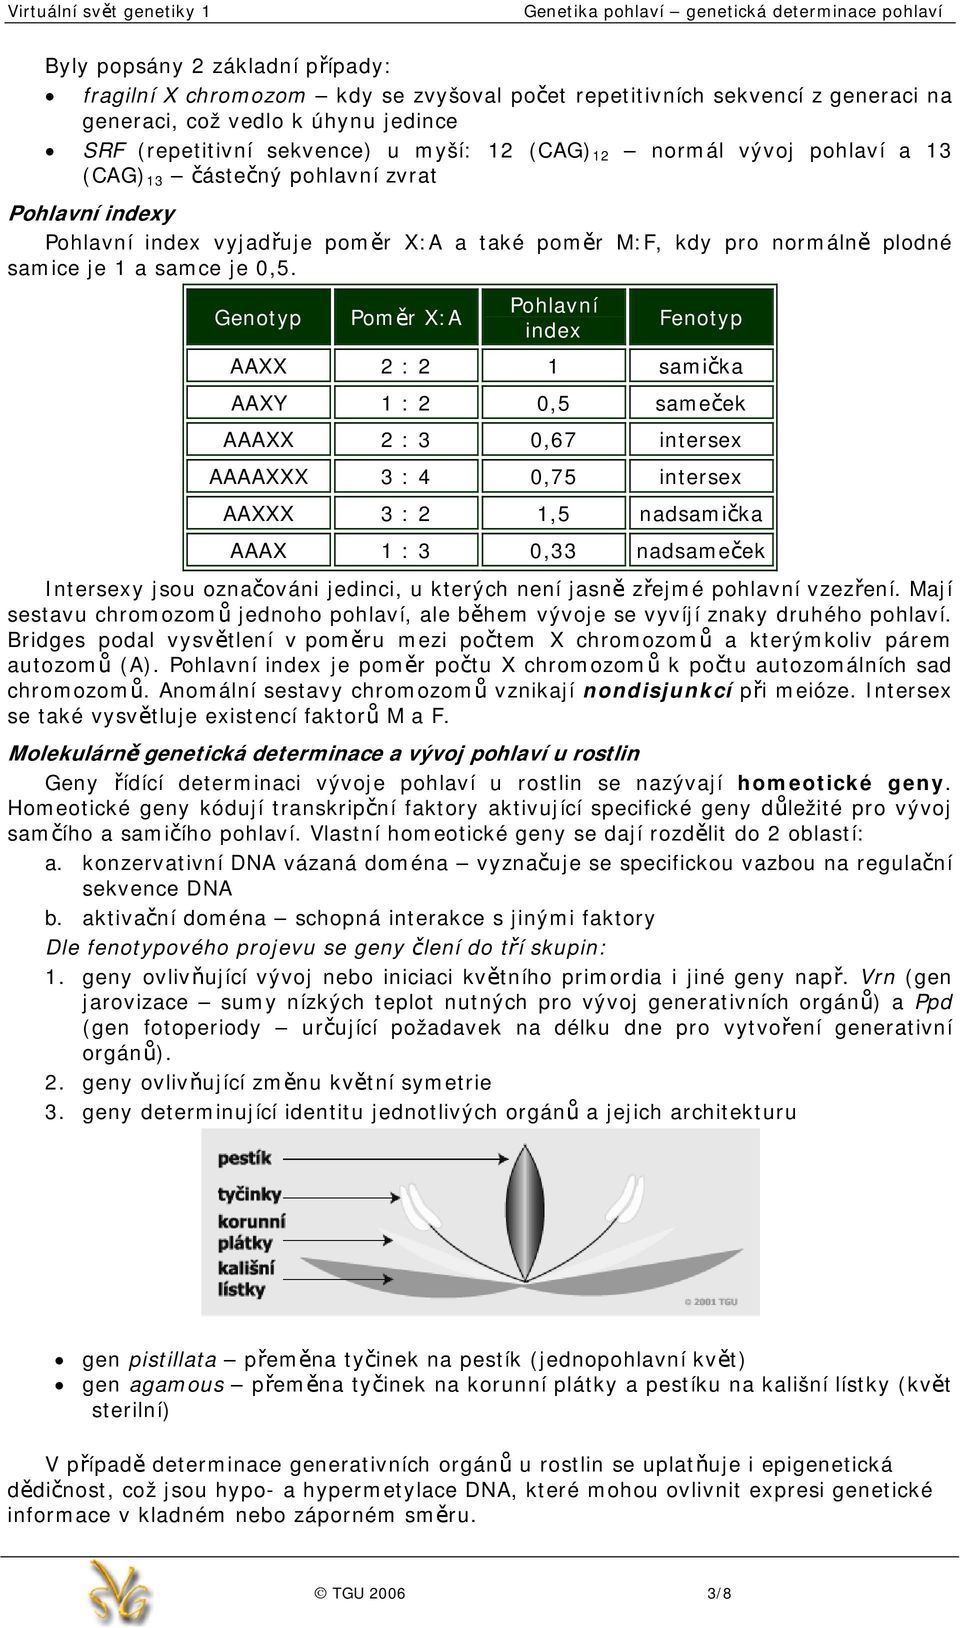 Genotyp Poměr X:A Pohlavní index Fenotyp AAXX 2 : 2 1 samička AAXY 1 : 2 0,5 sameček AAAXX 2 : 3 0,67 intersex AAAAXXX 3 : 4 0,75 intersex AAXXX 3 : 2 1,5 nadsamička AAAX 1 : 3 0,33 nadsameček